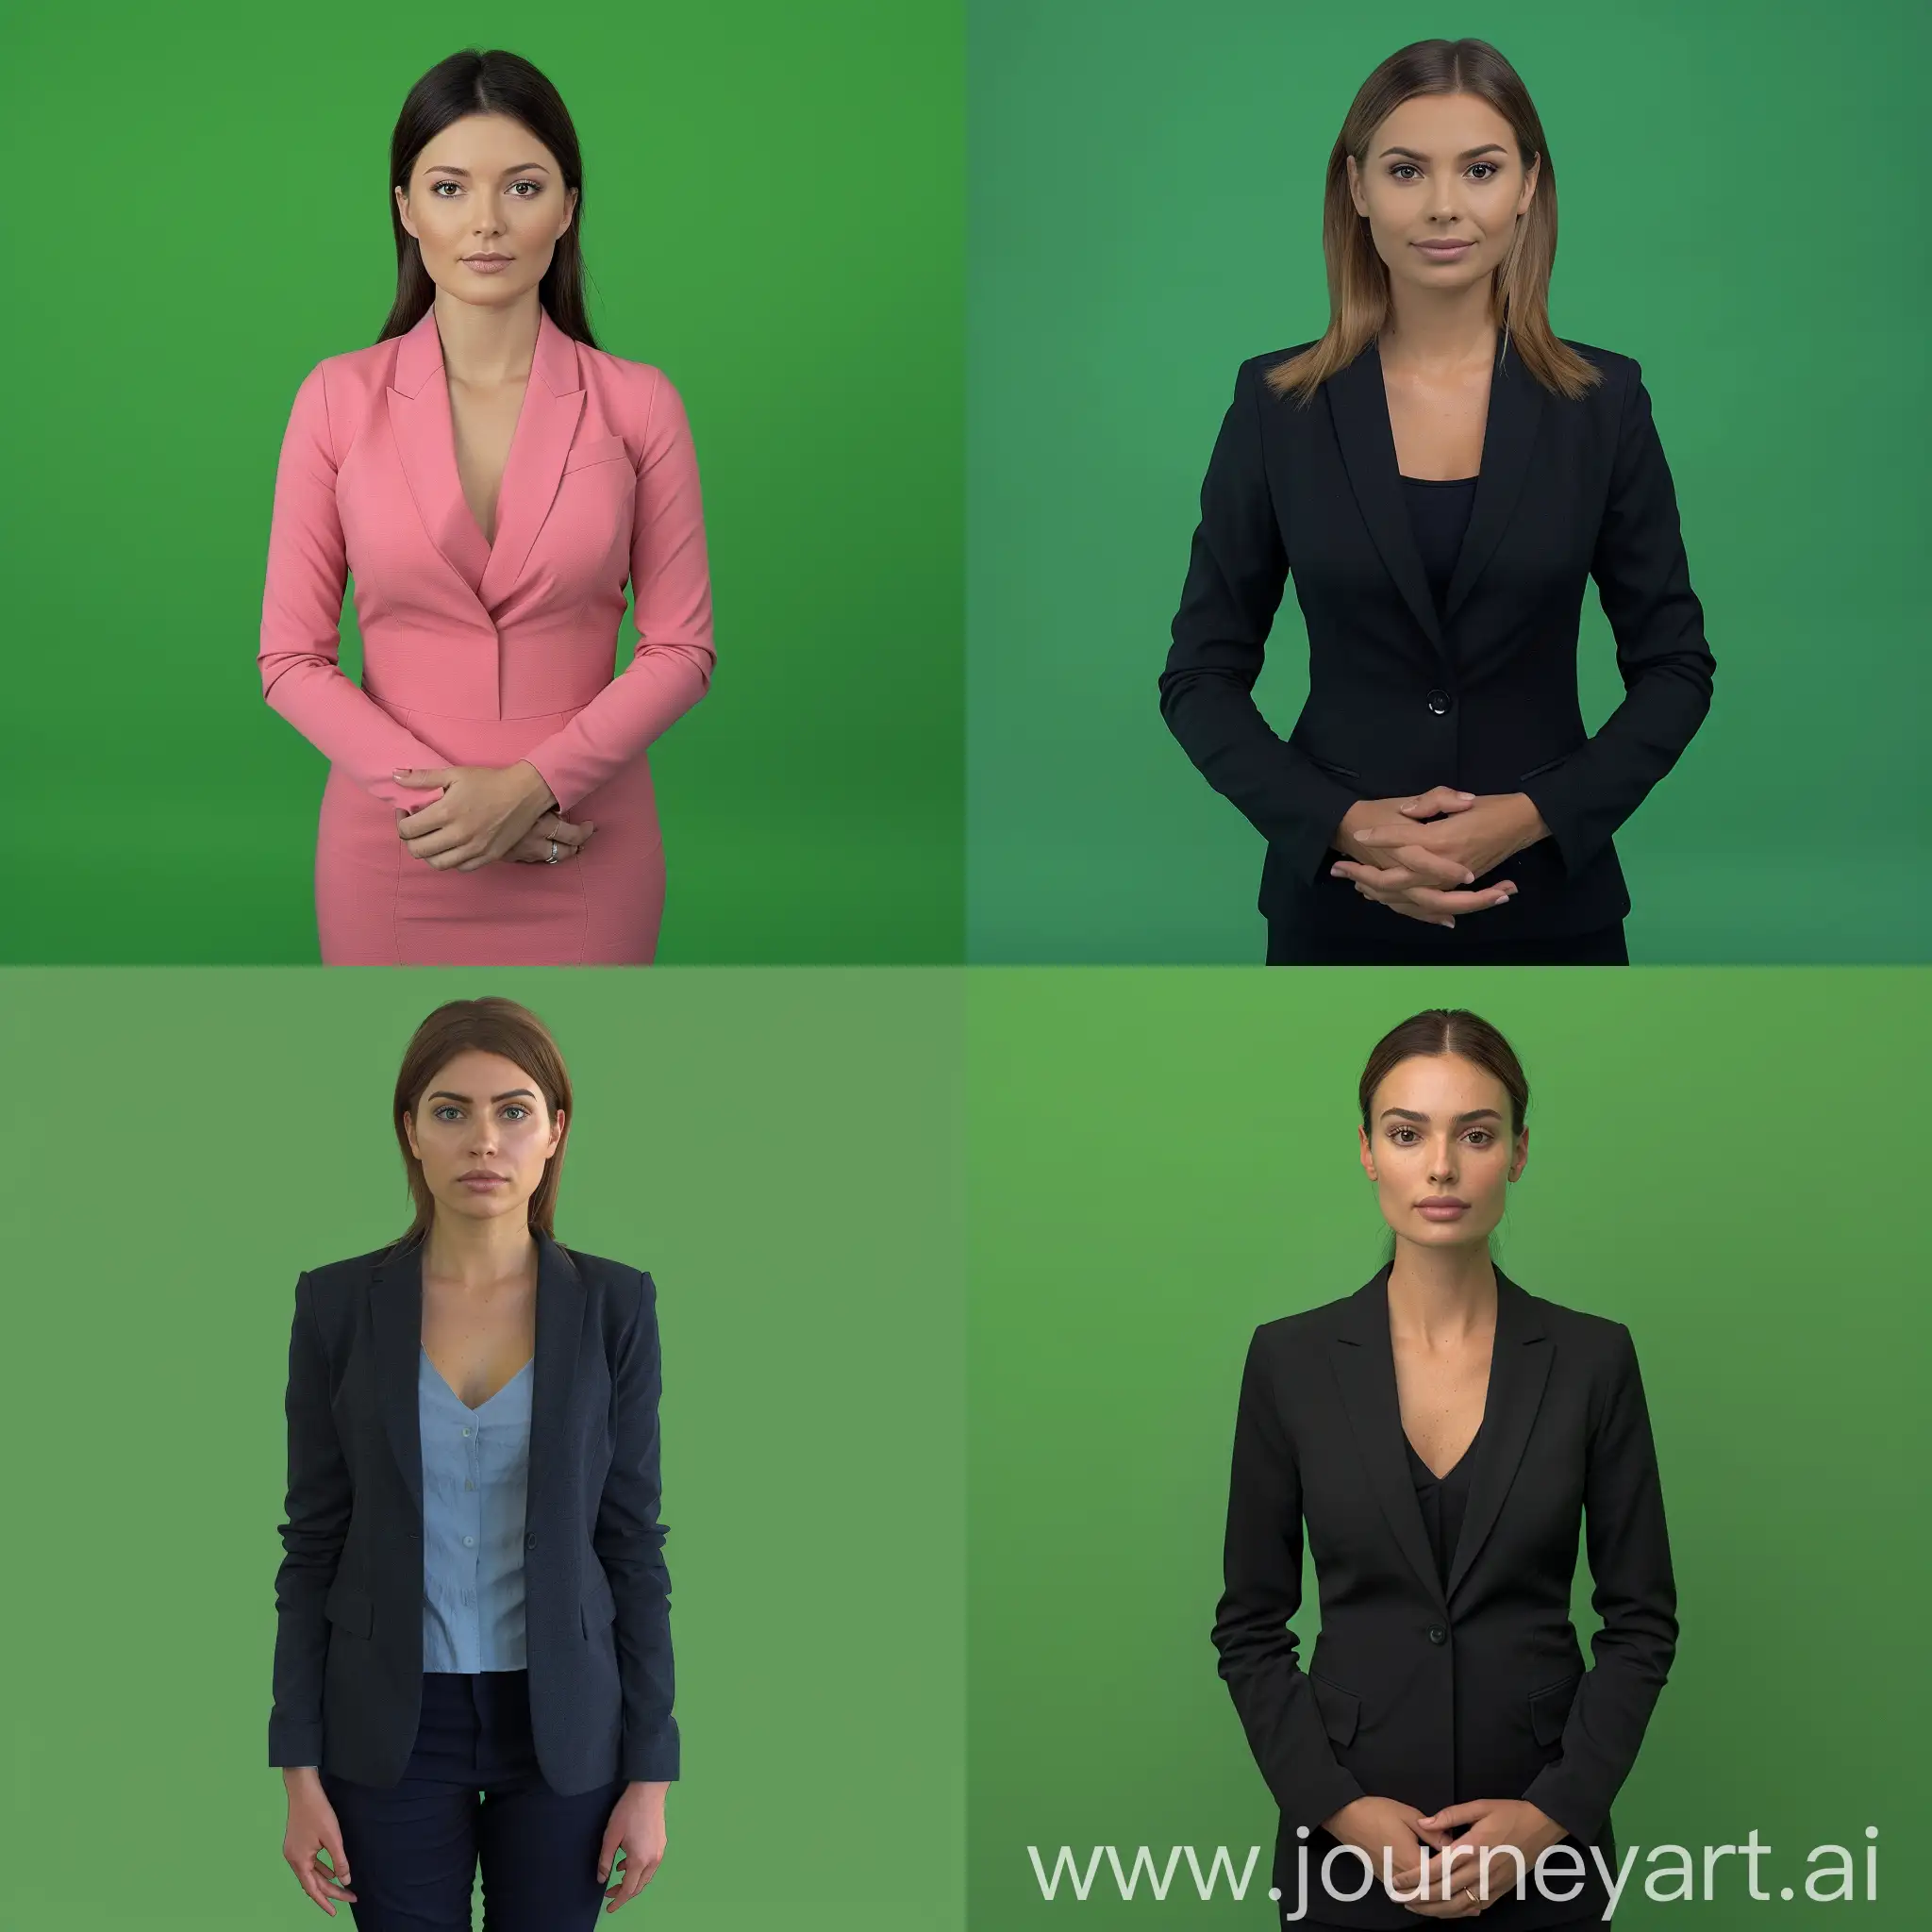 Formal-Female-News-Presenter-Portrait-in-Solid-Green-Background